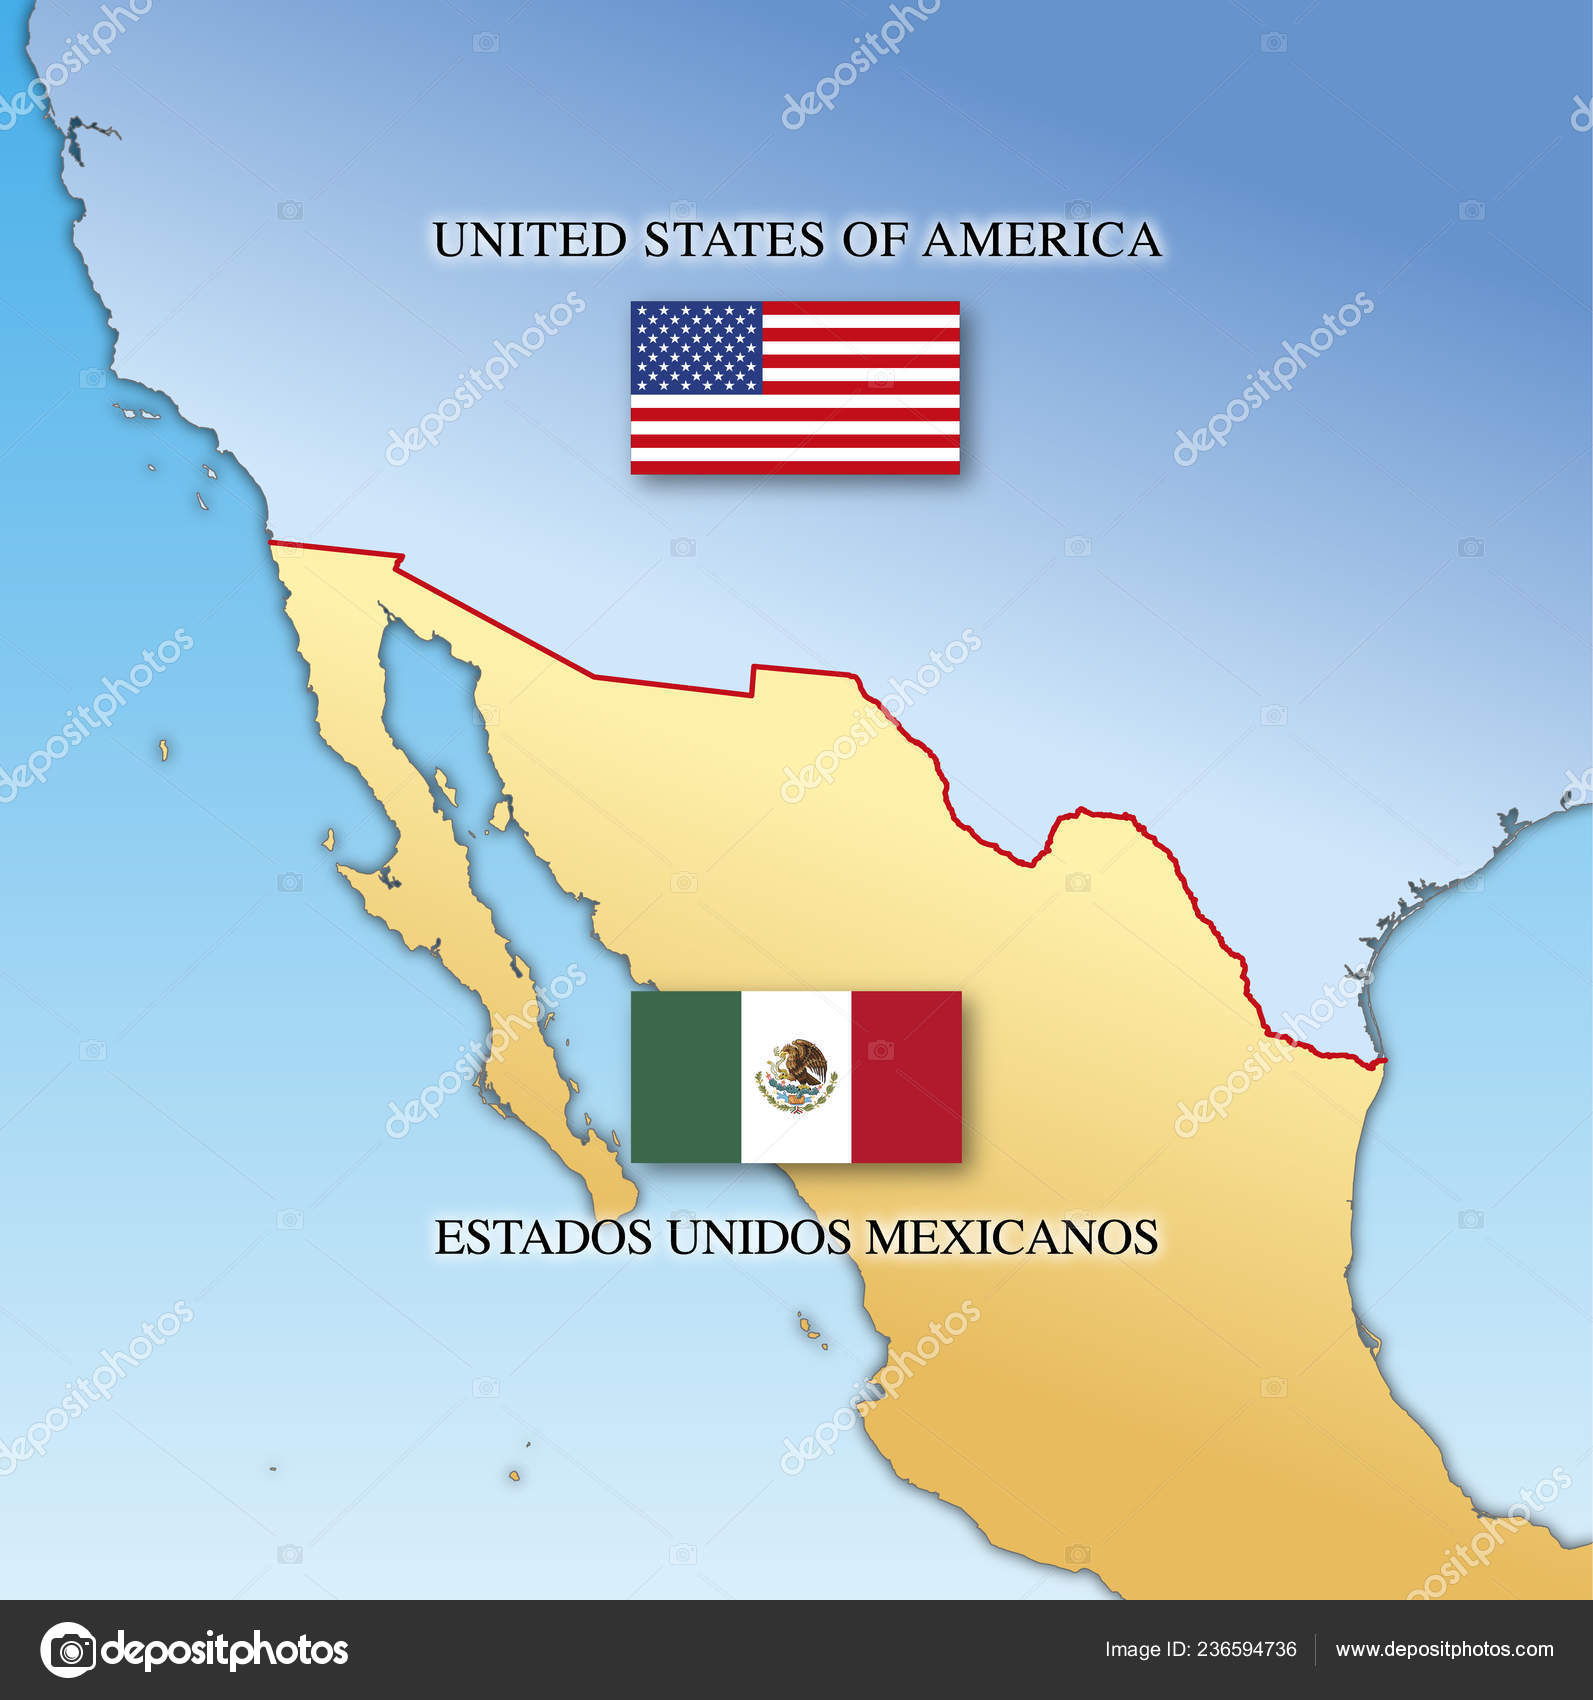 Depositphotos 236594736 Stock Illustration Usa Mexico Border Map National 